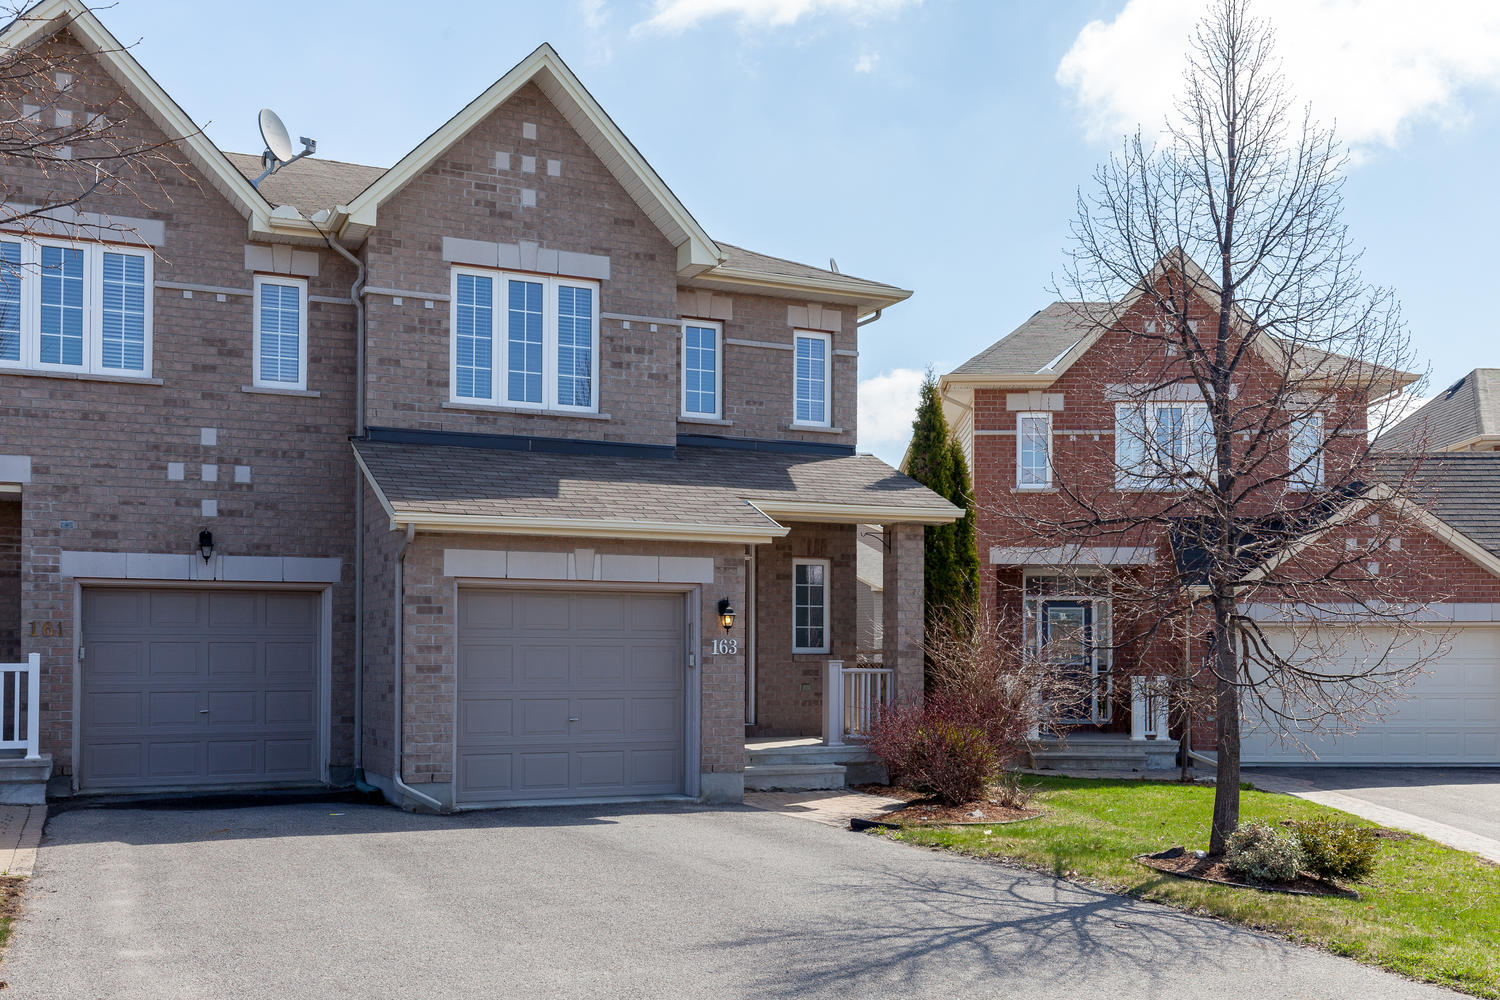 Ottawa Home for Sale - SOLD! - Ottawa Homes for Sale | BGM Real Estate